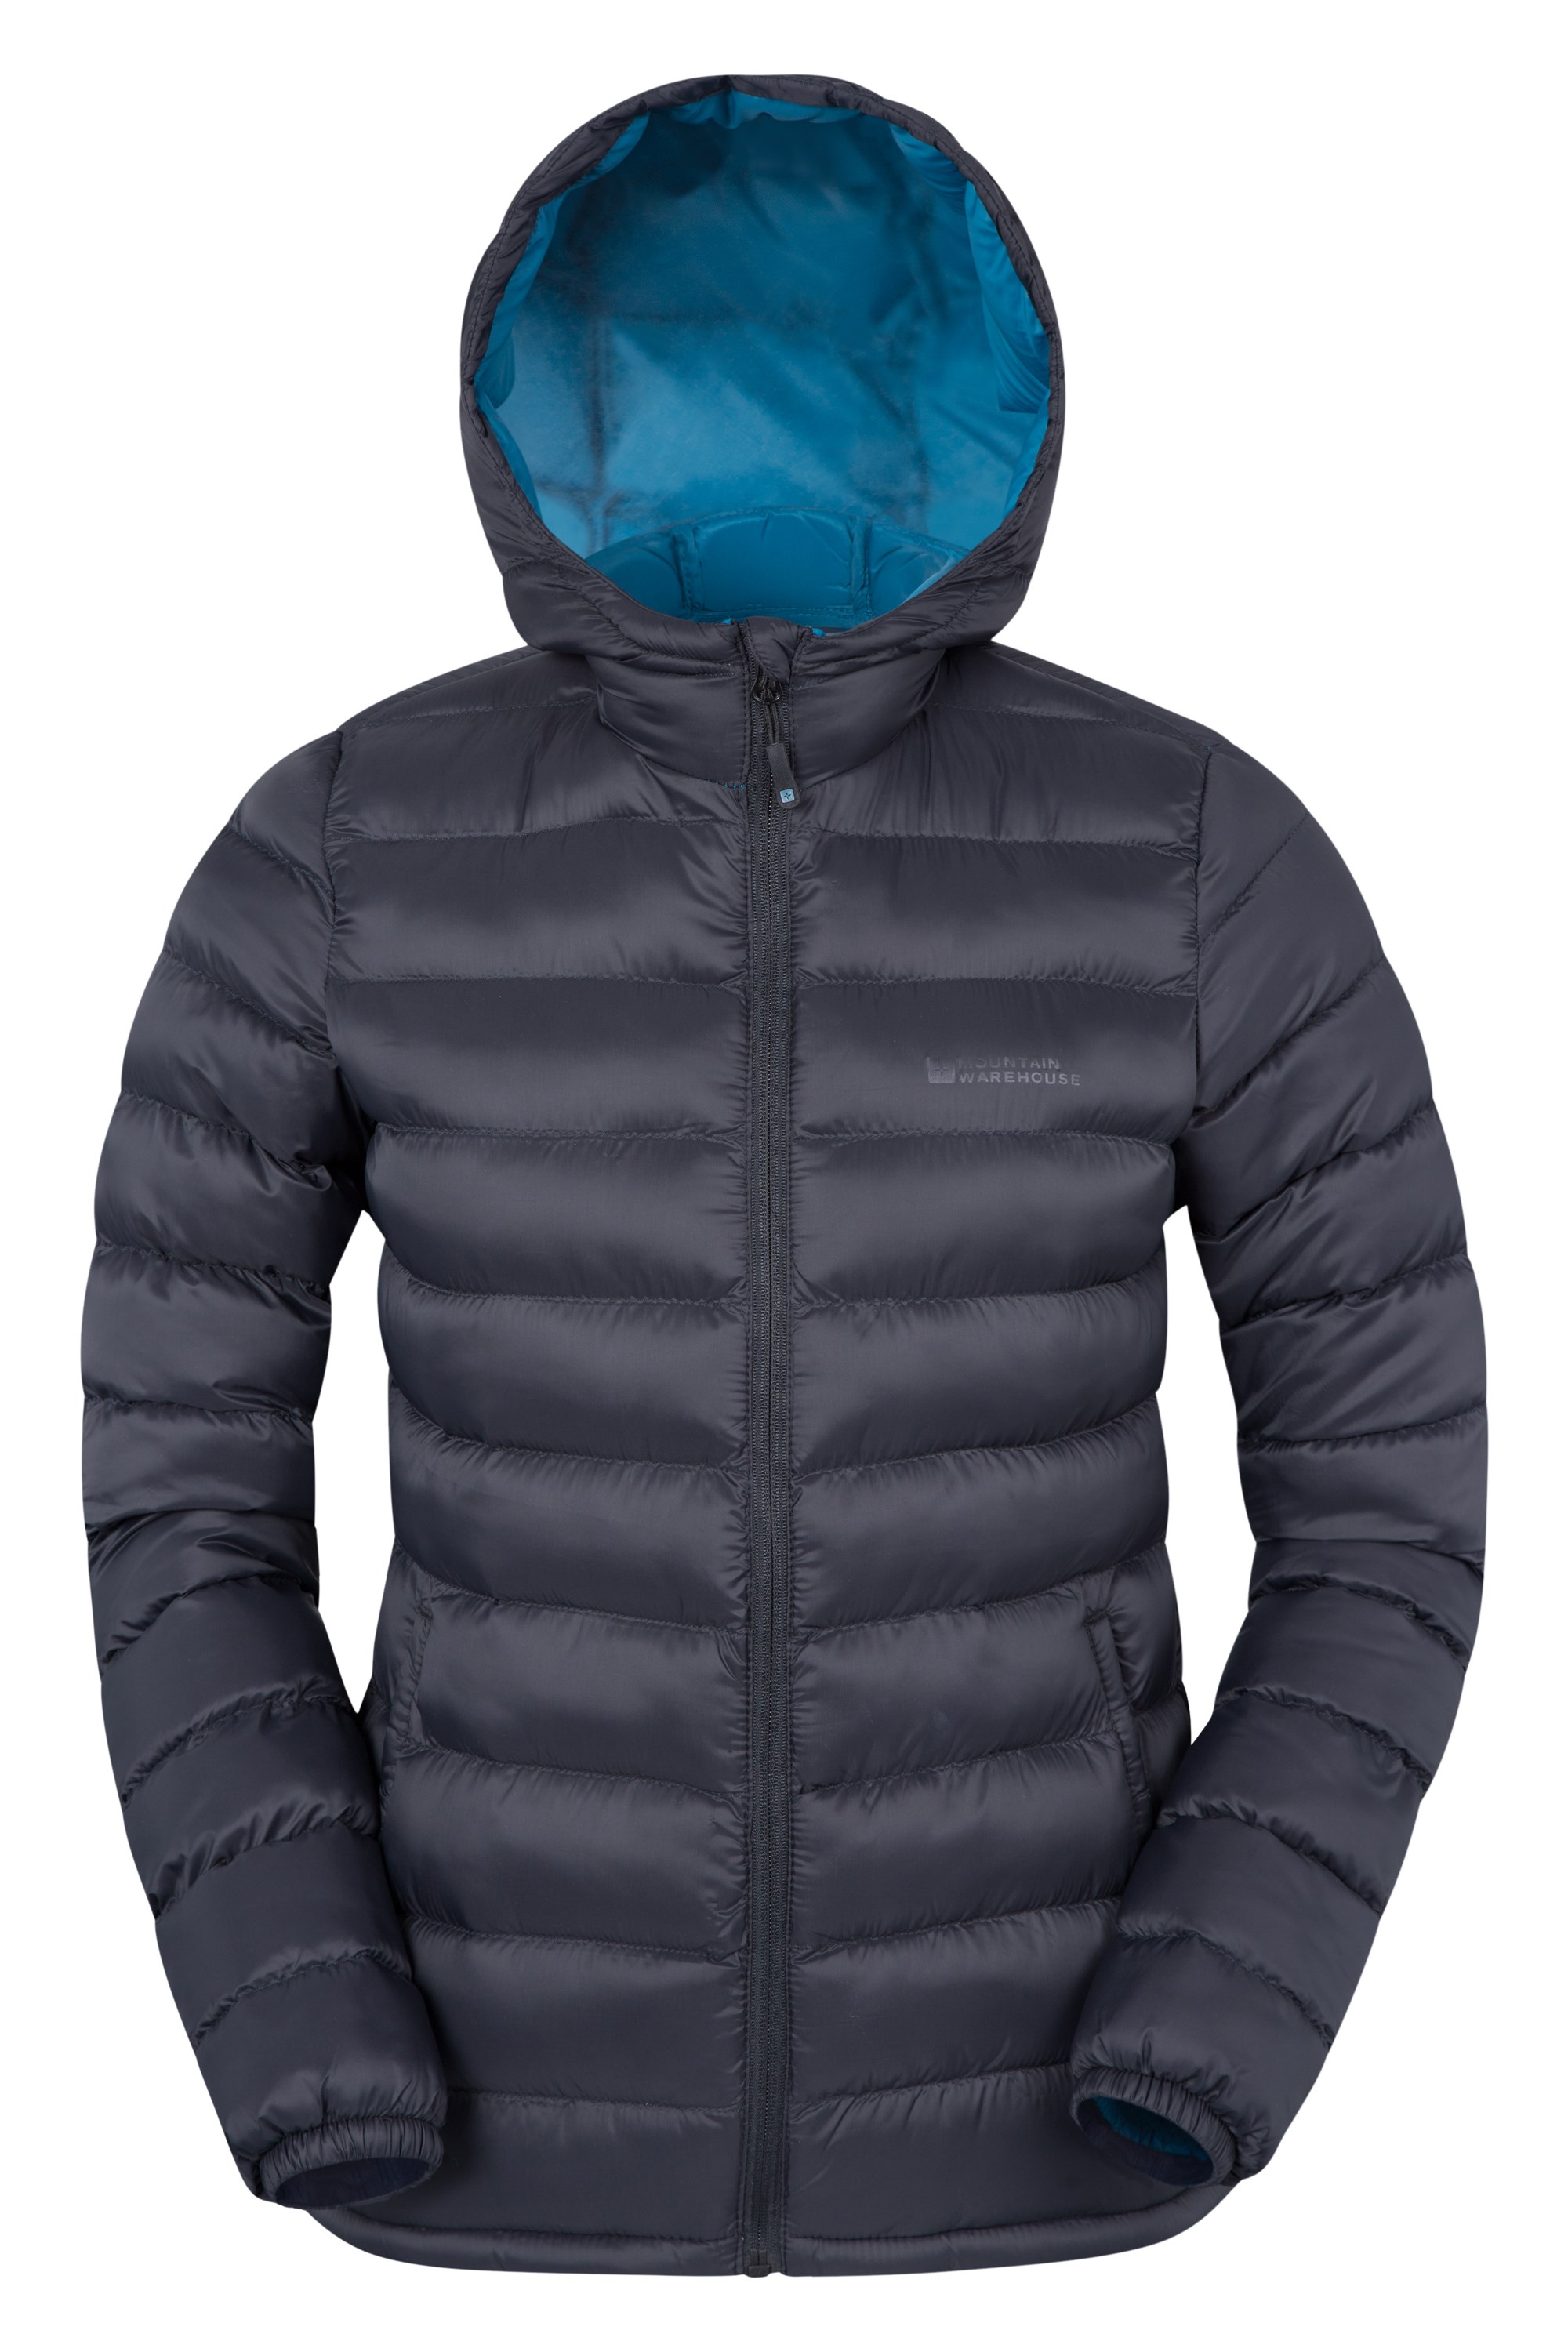 For Winter Jet Black 10 Mountain Warehouse Seasons Womens Padded Jacket